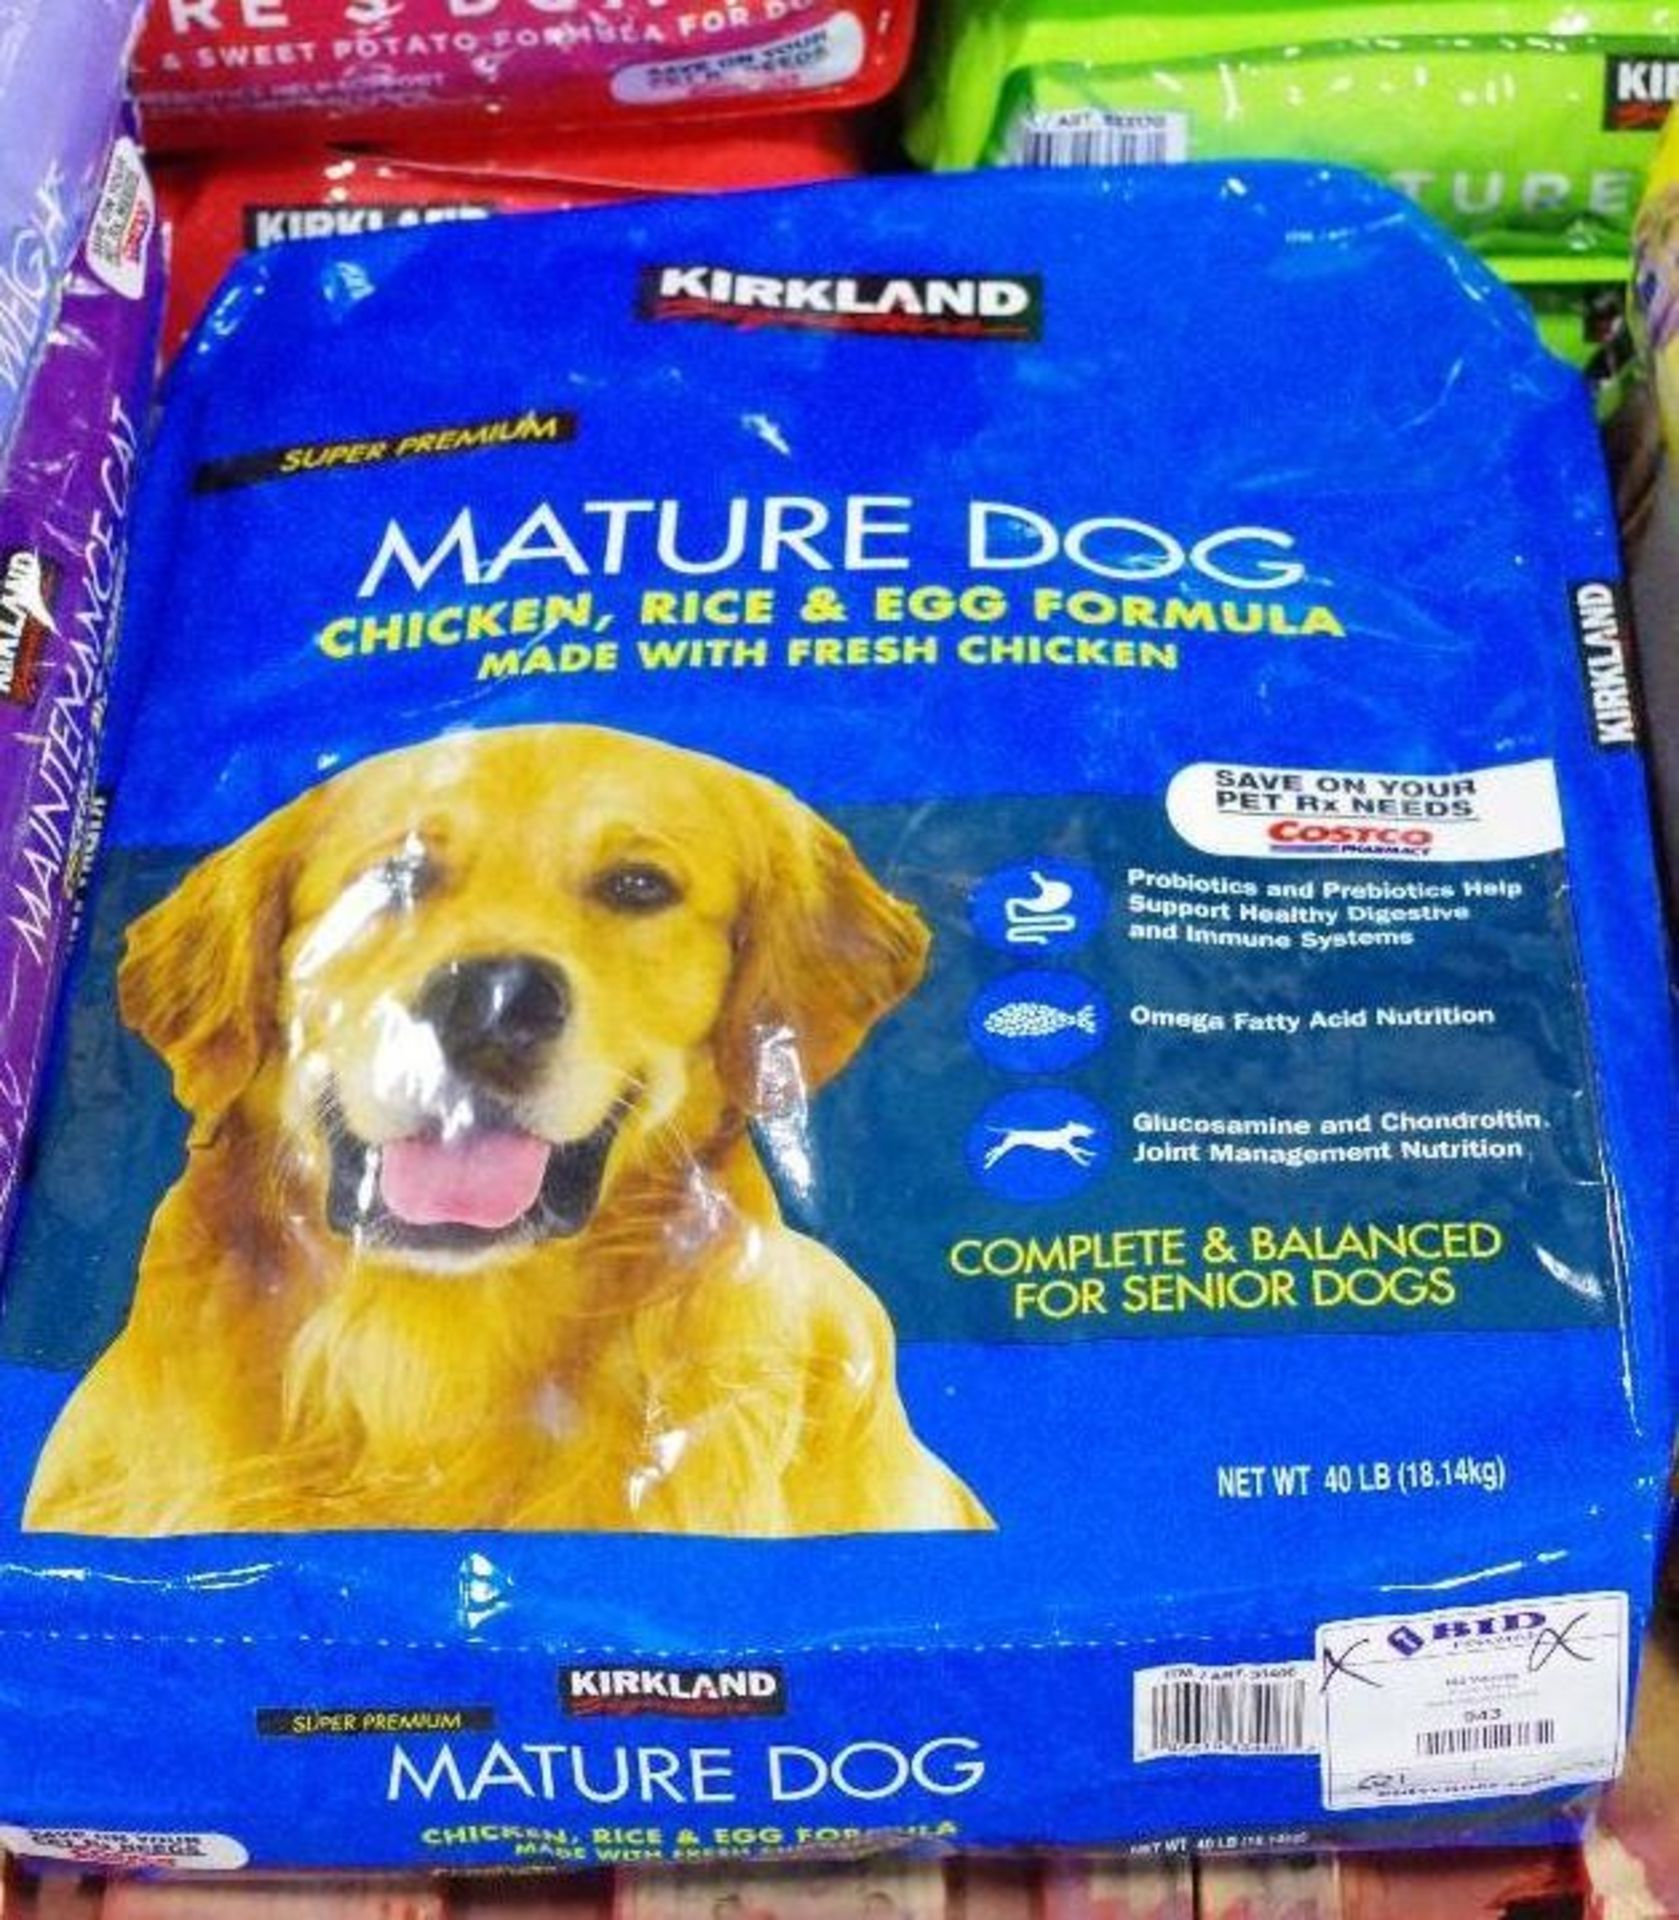 KIRKLAND SUPER PREMIUM 40-lbs. Mature Dog, Dog Food Bag - Image 2 of 3